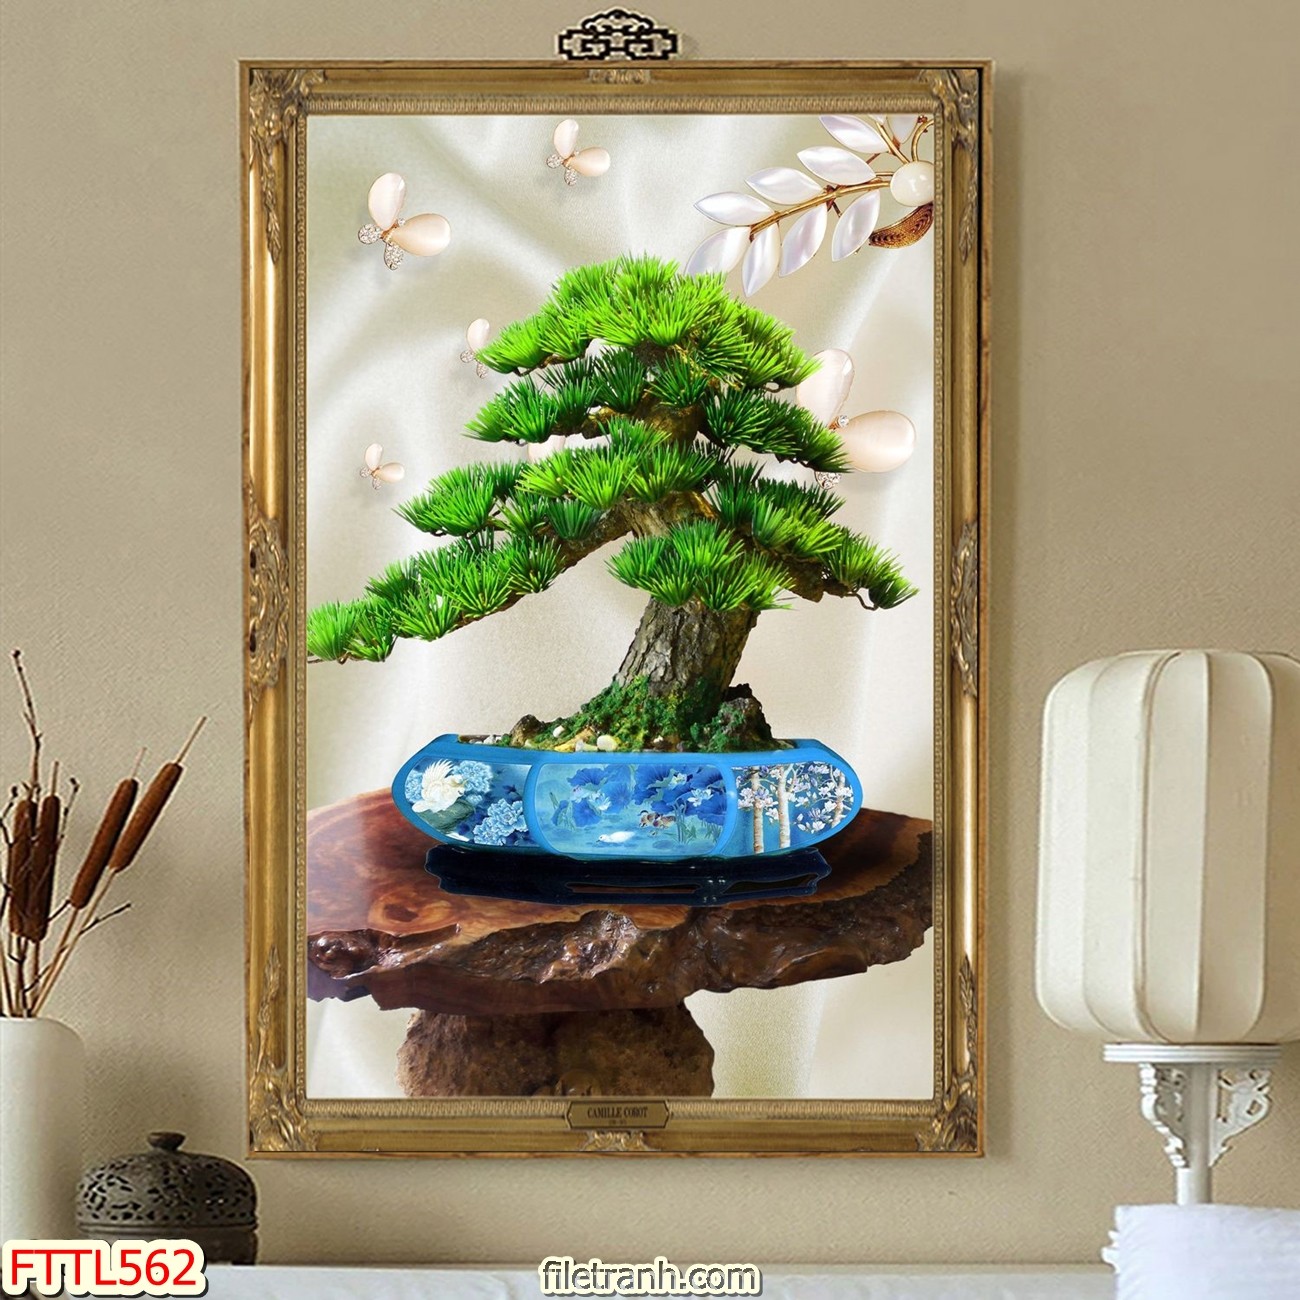 https://filetranh.com/file-tranh-chau-mai-bonsai/file-tranh-chau-mai-bonsai-fttl562.html